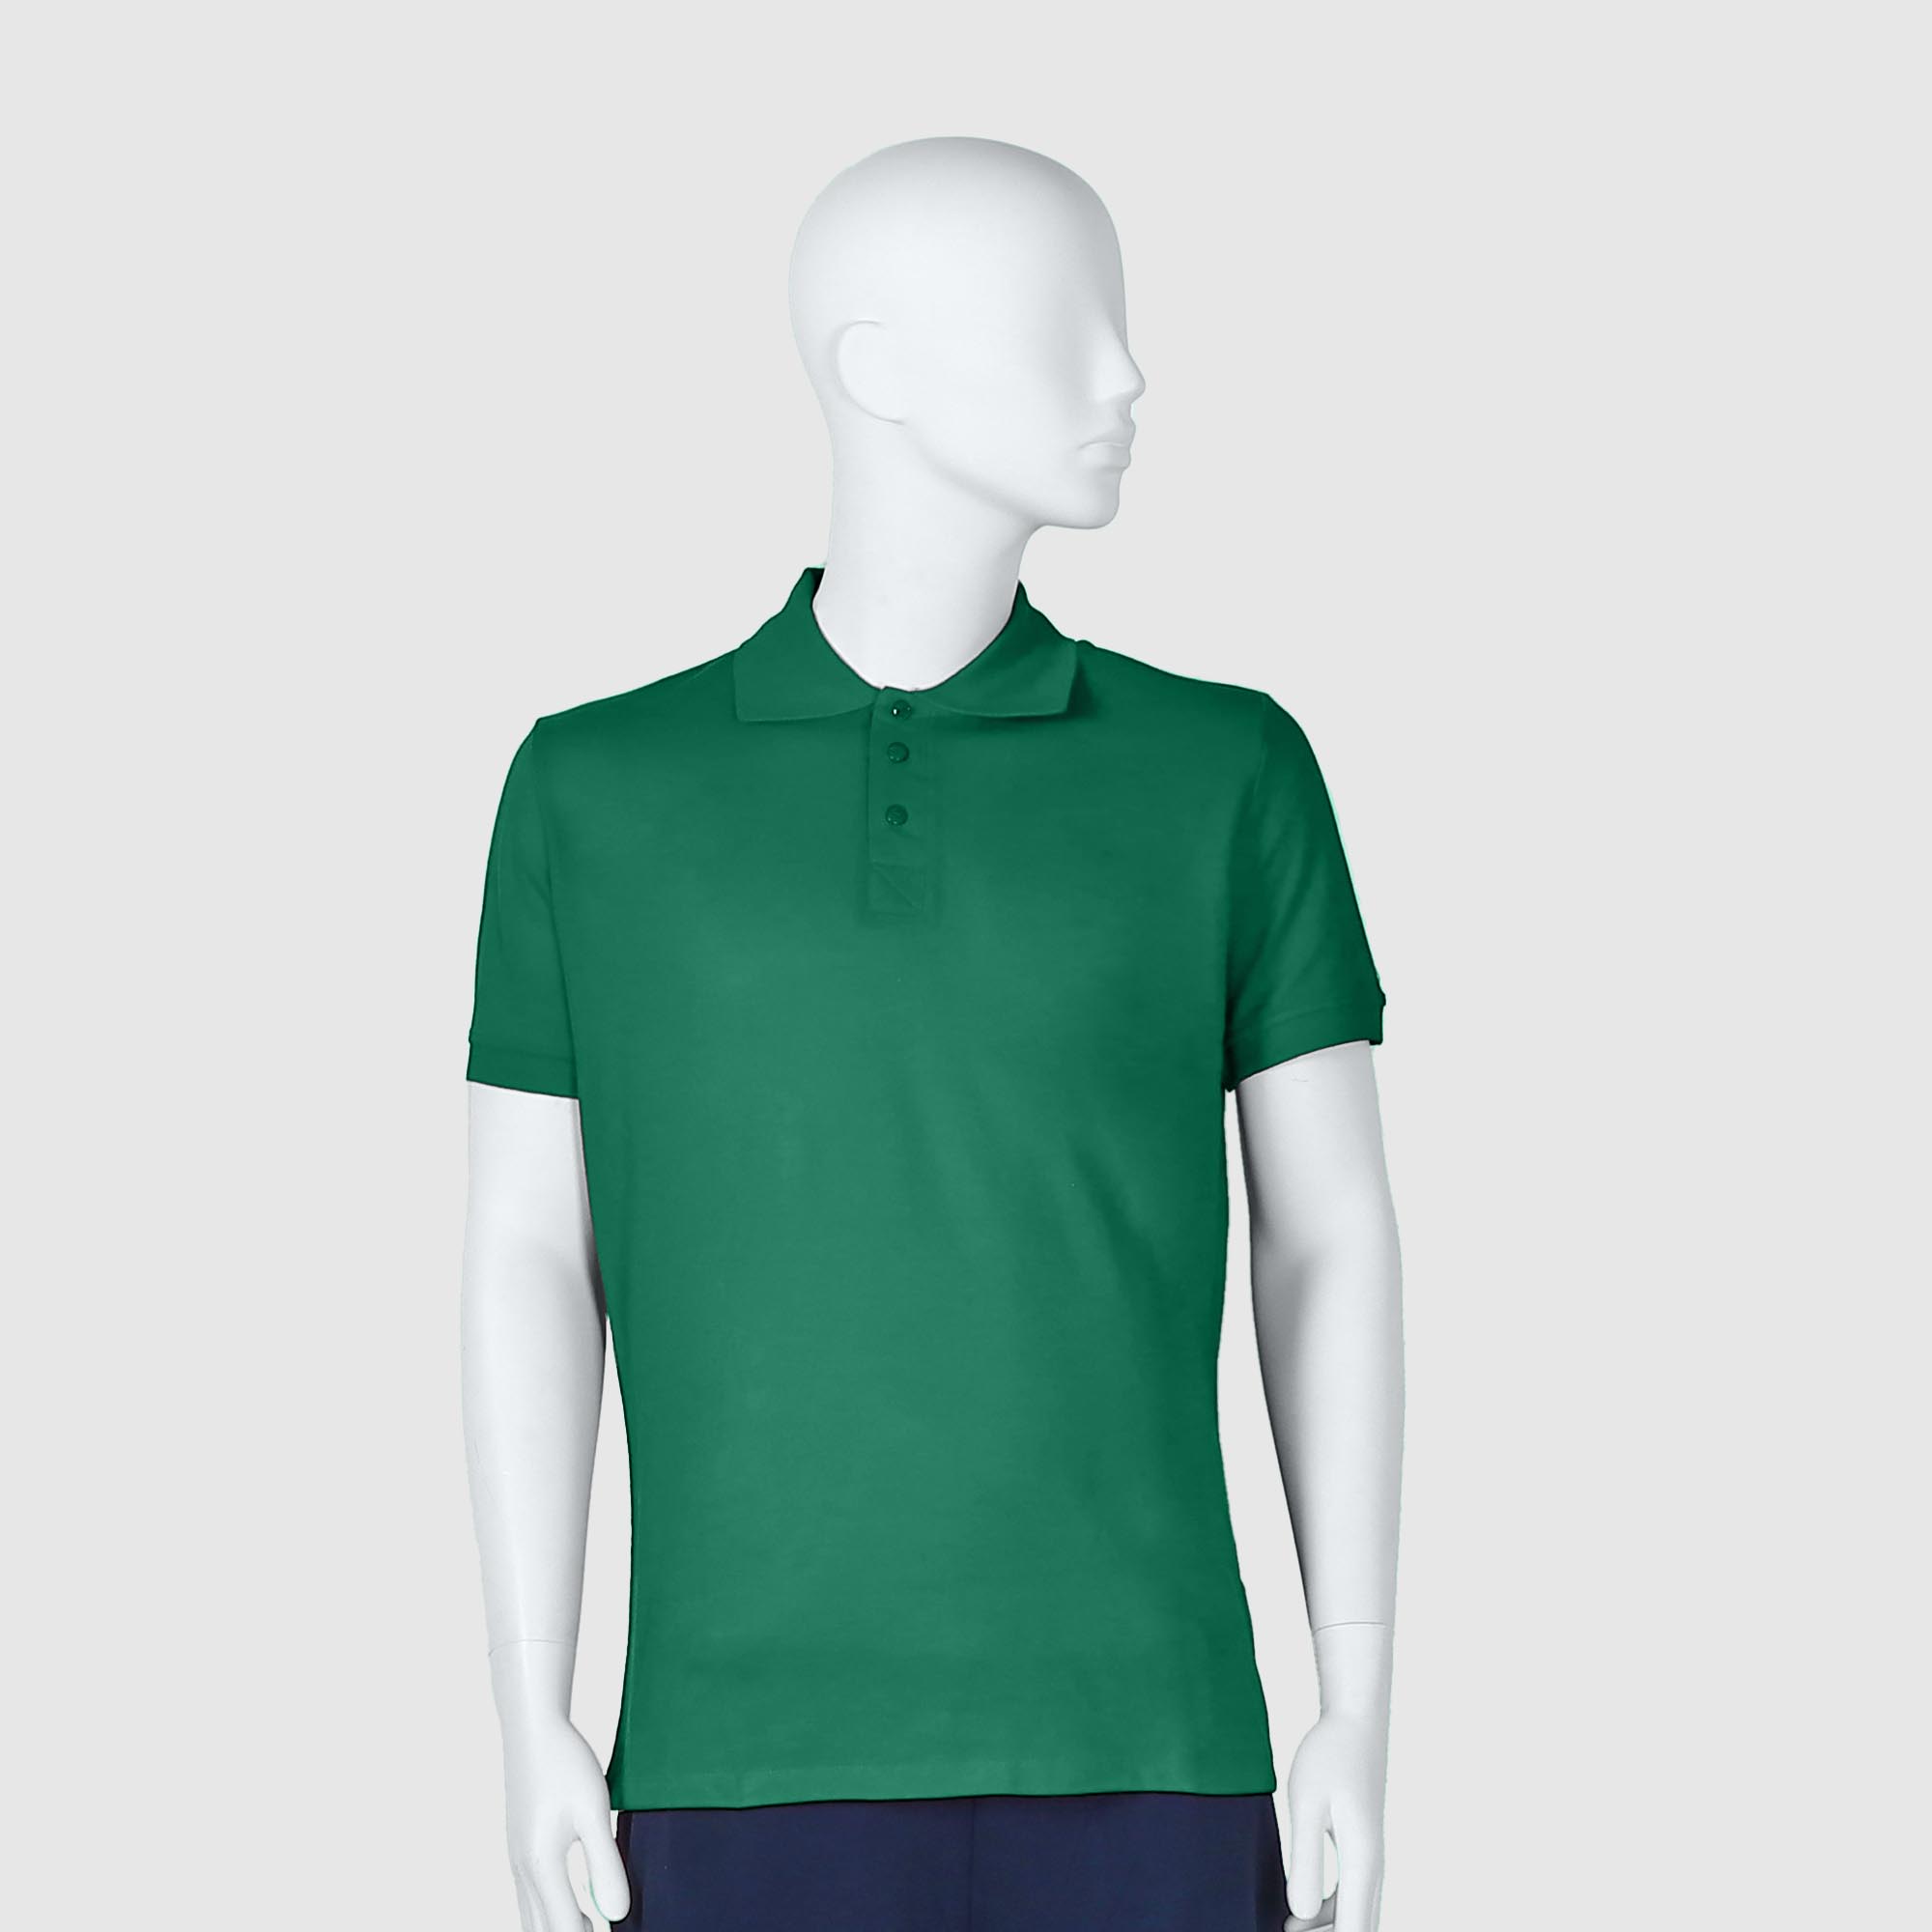 Мужская футболка-поло Diva Teks зелёная (DTD-09), цвет зелёный, размер 50-52